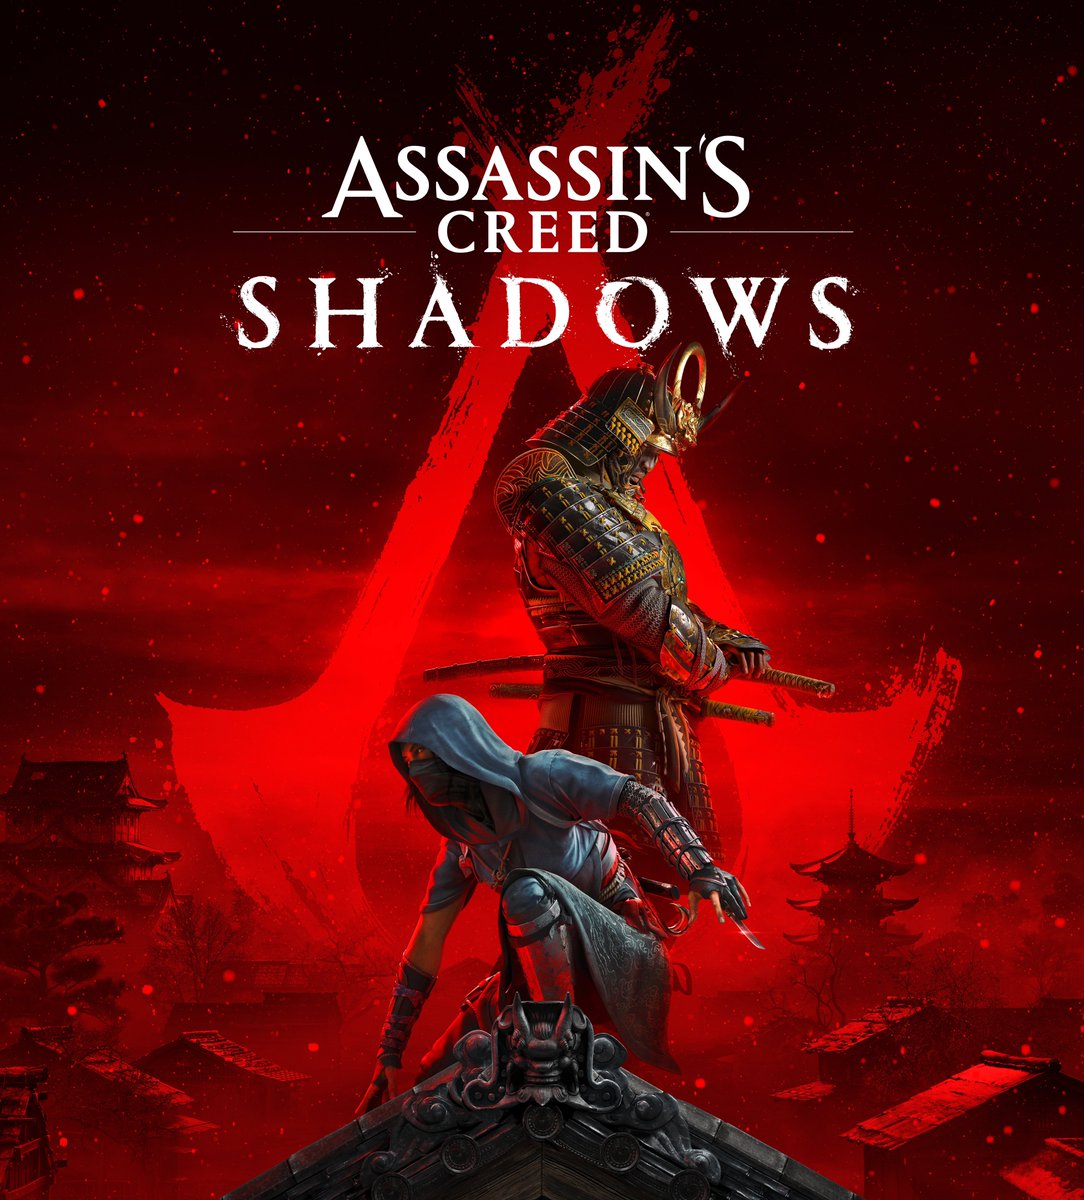 NEWS: #AssassinsCreedShadows official key art is here🚀

Do you like it?😎 #AssassinsCreed #Gaming